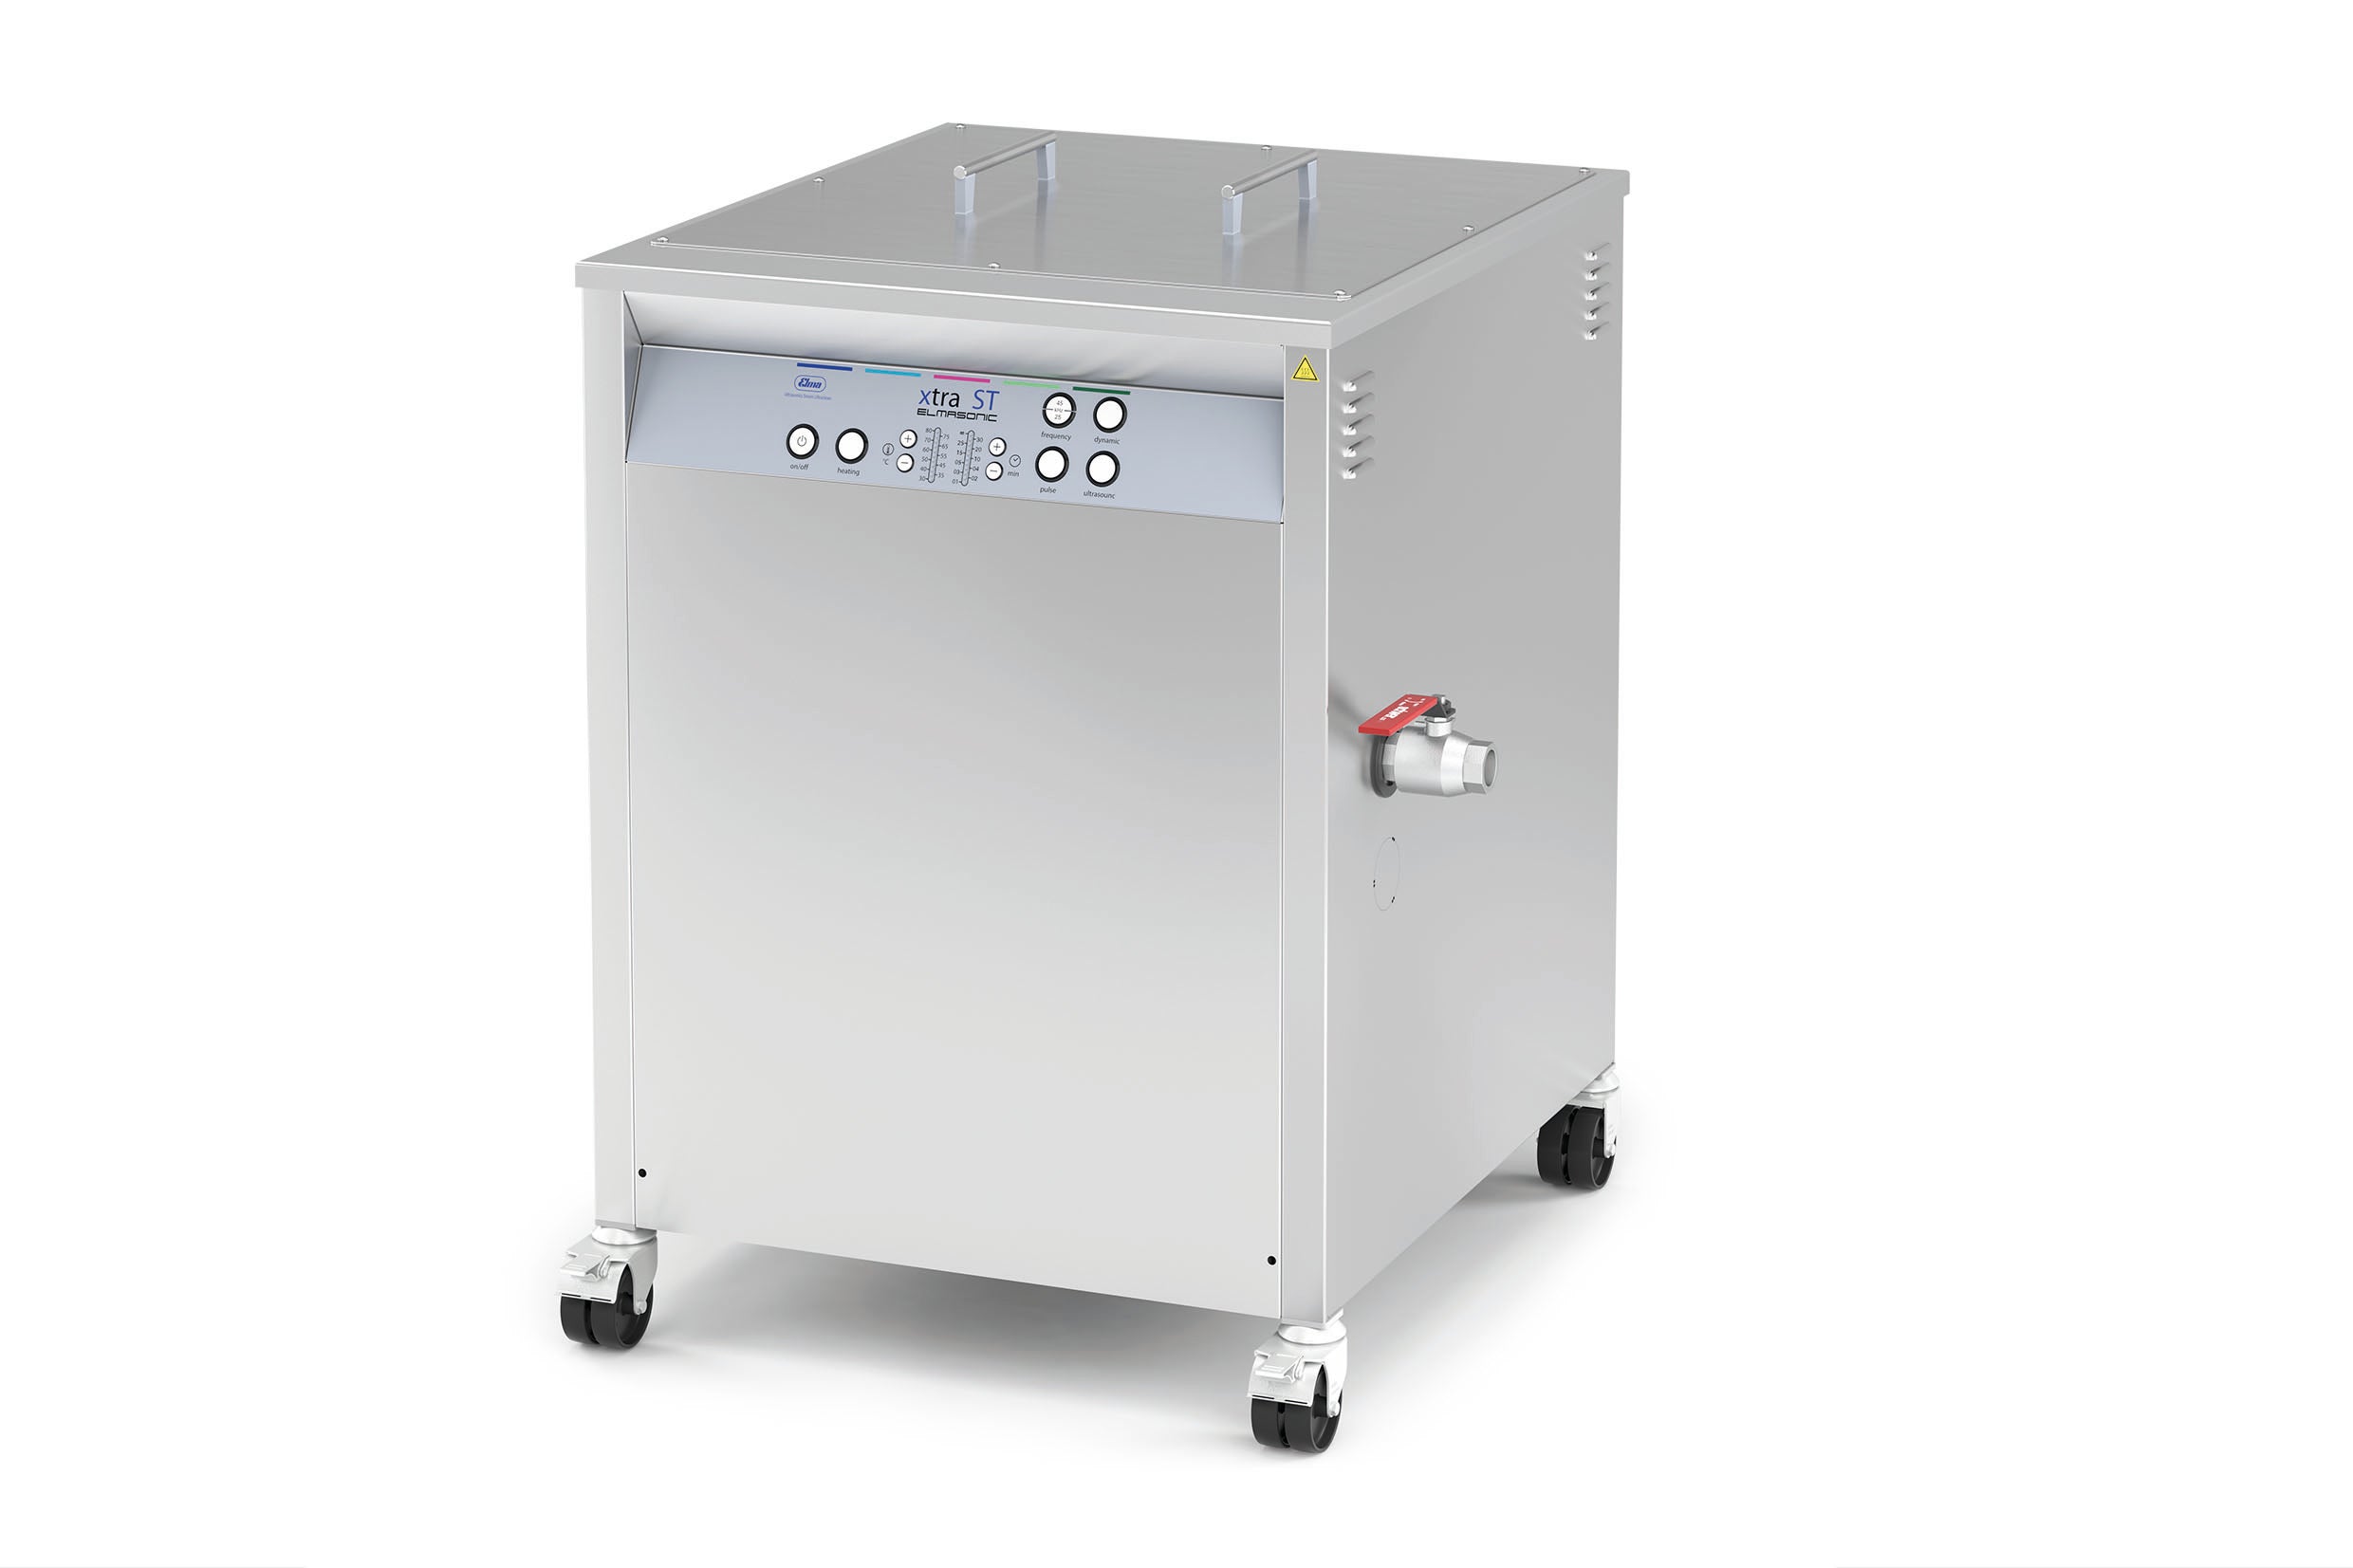 elma-xtra-st1400h-33-3gal-industrial-ultrasonic-cleaner-heated-107-7058